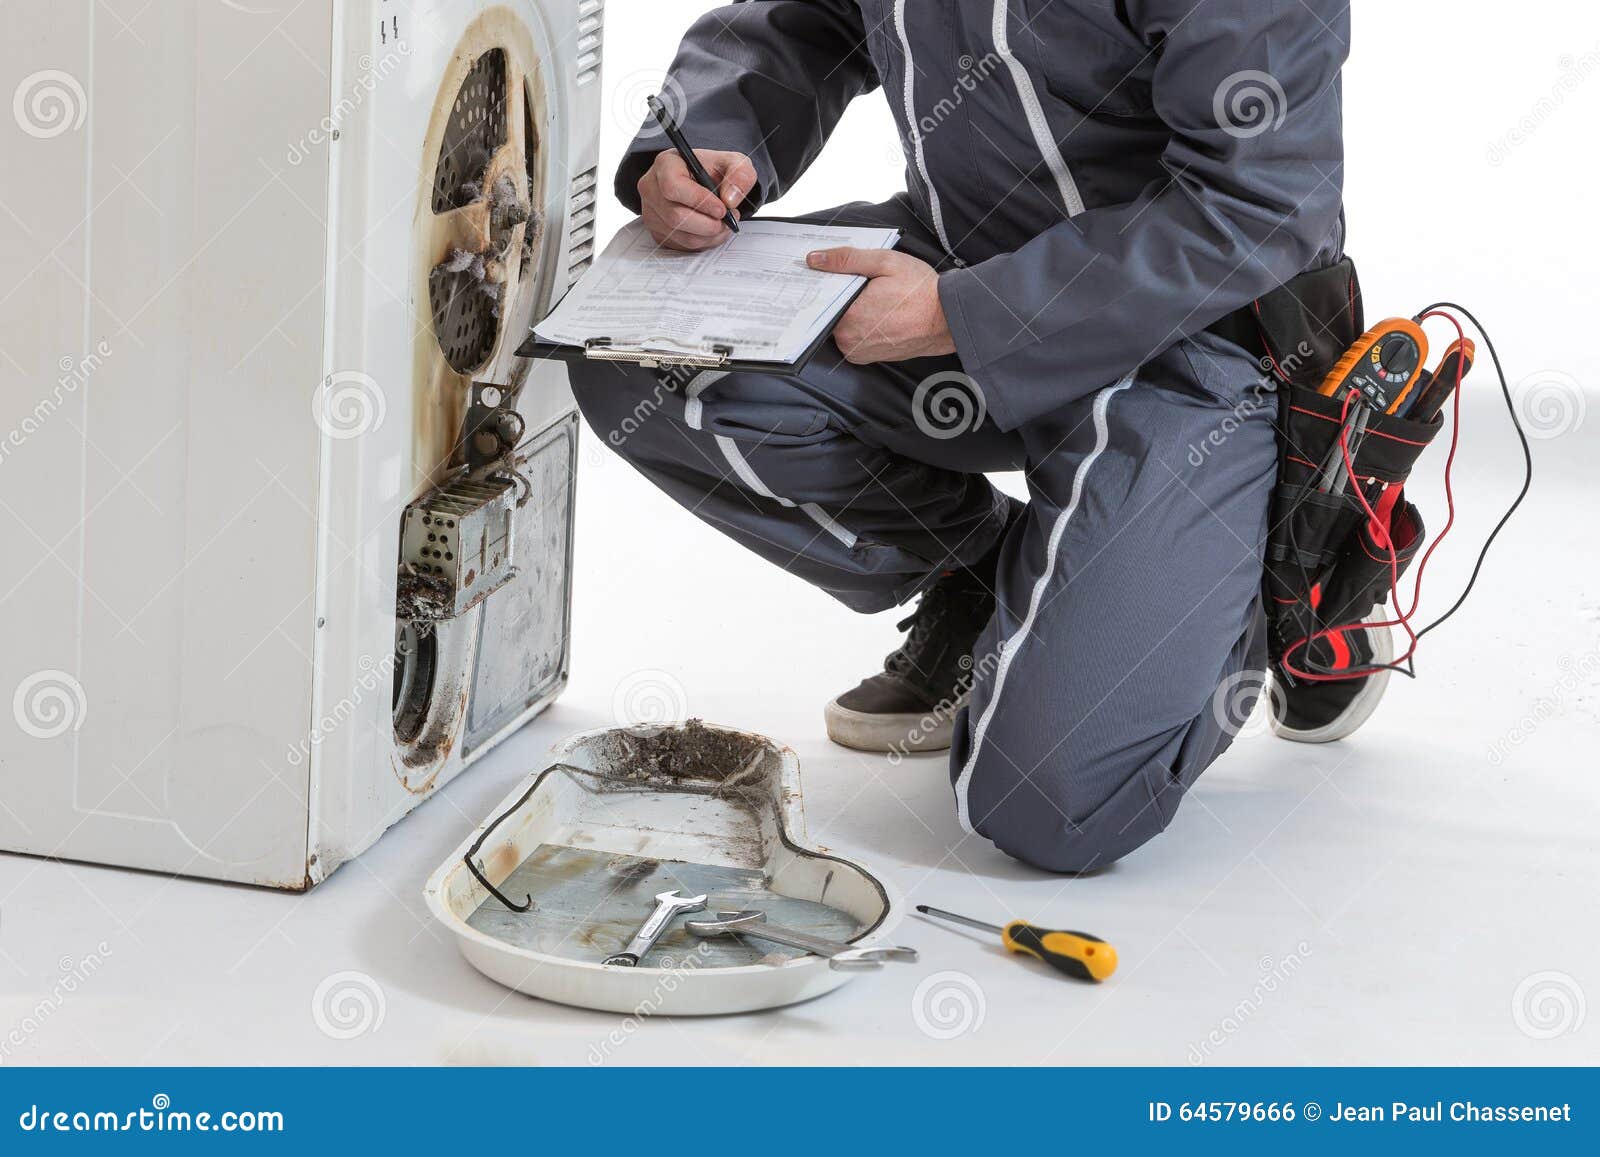 appliances repairman